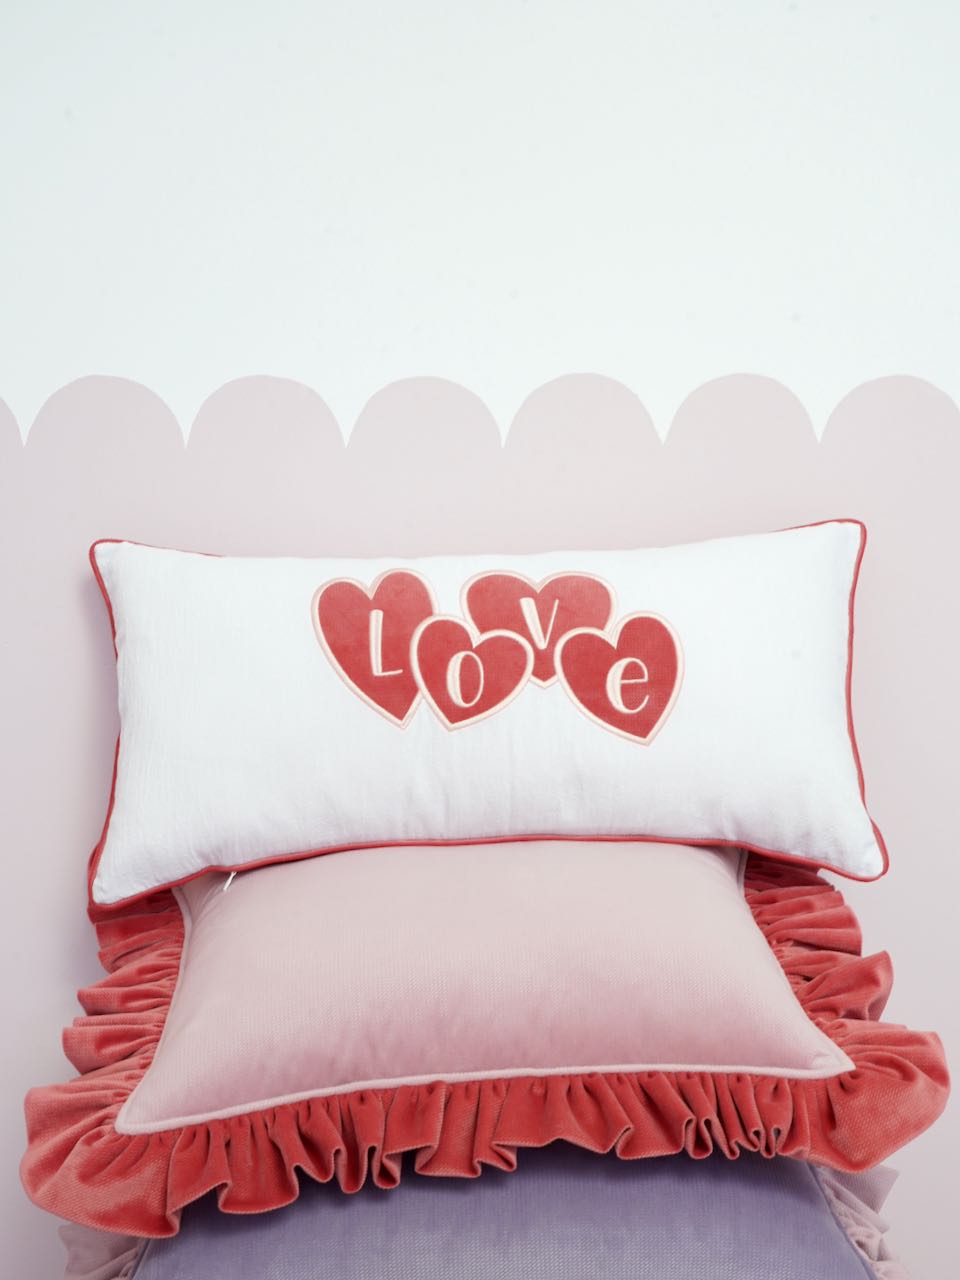 "Raspberry smoothie" Soft Velvet Pillow with Frill